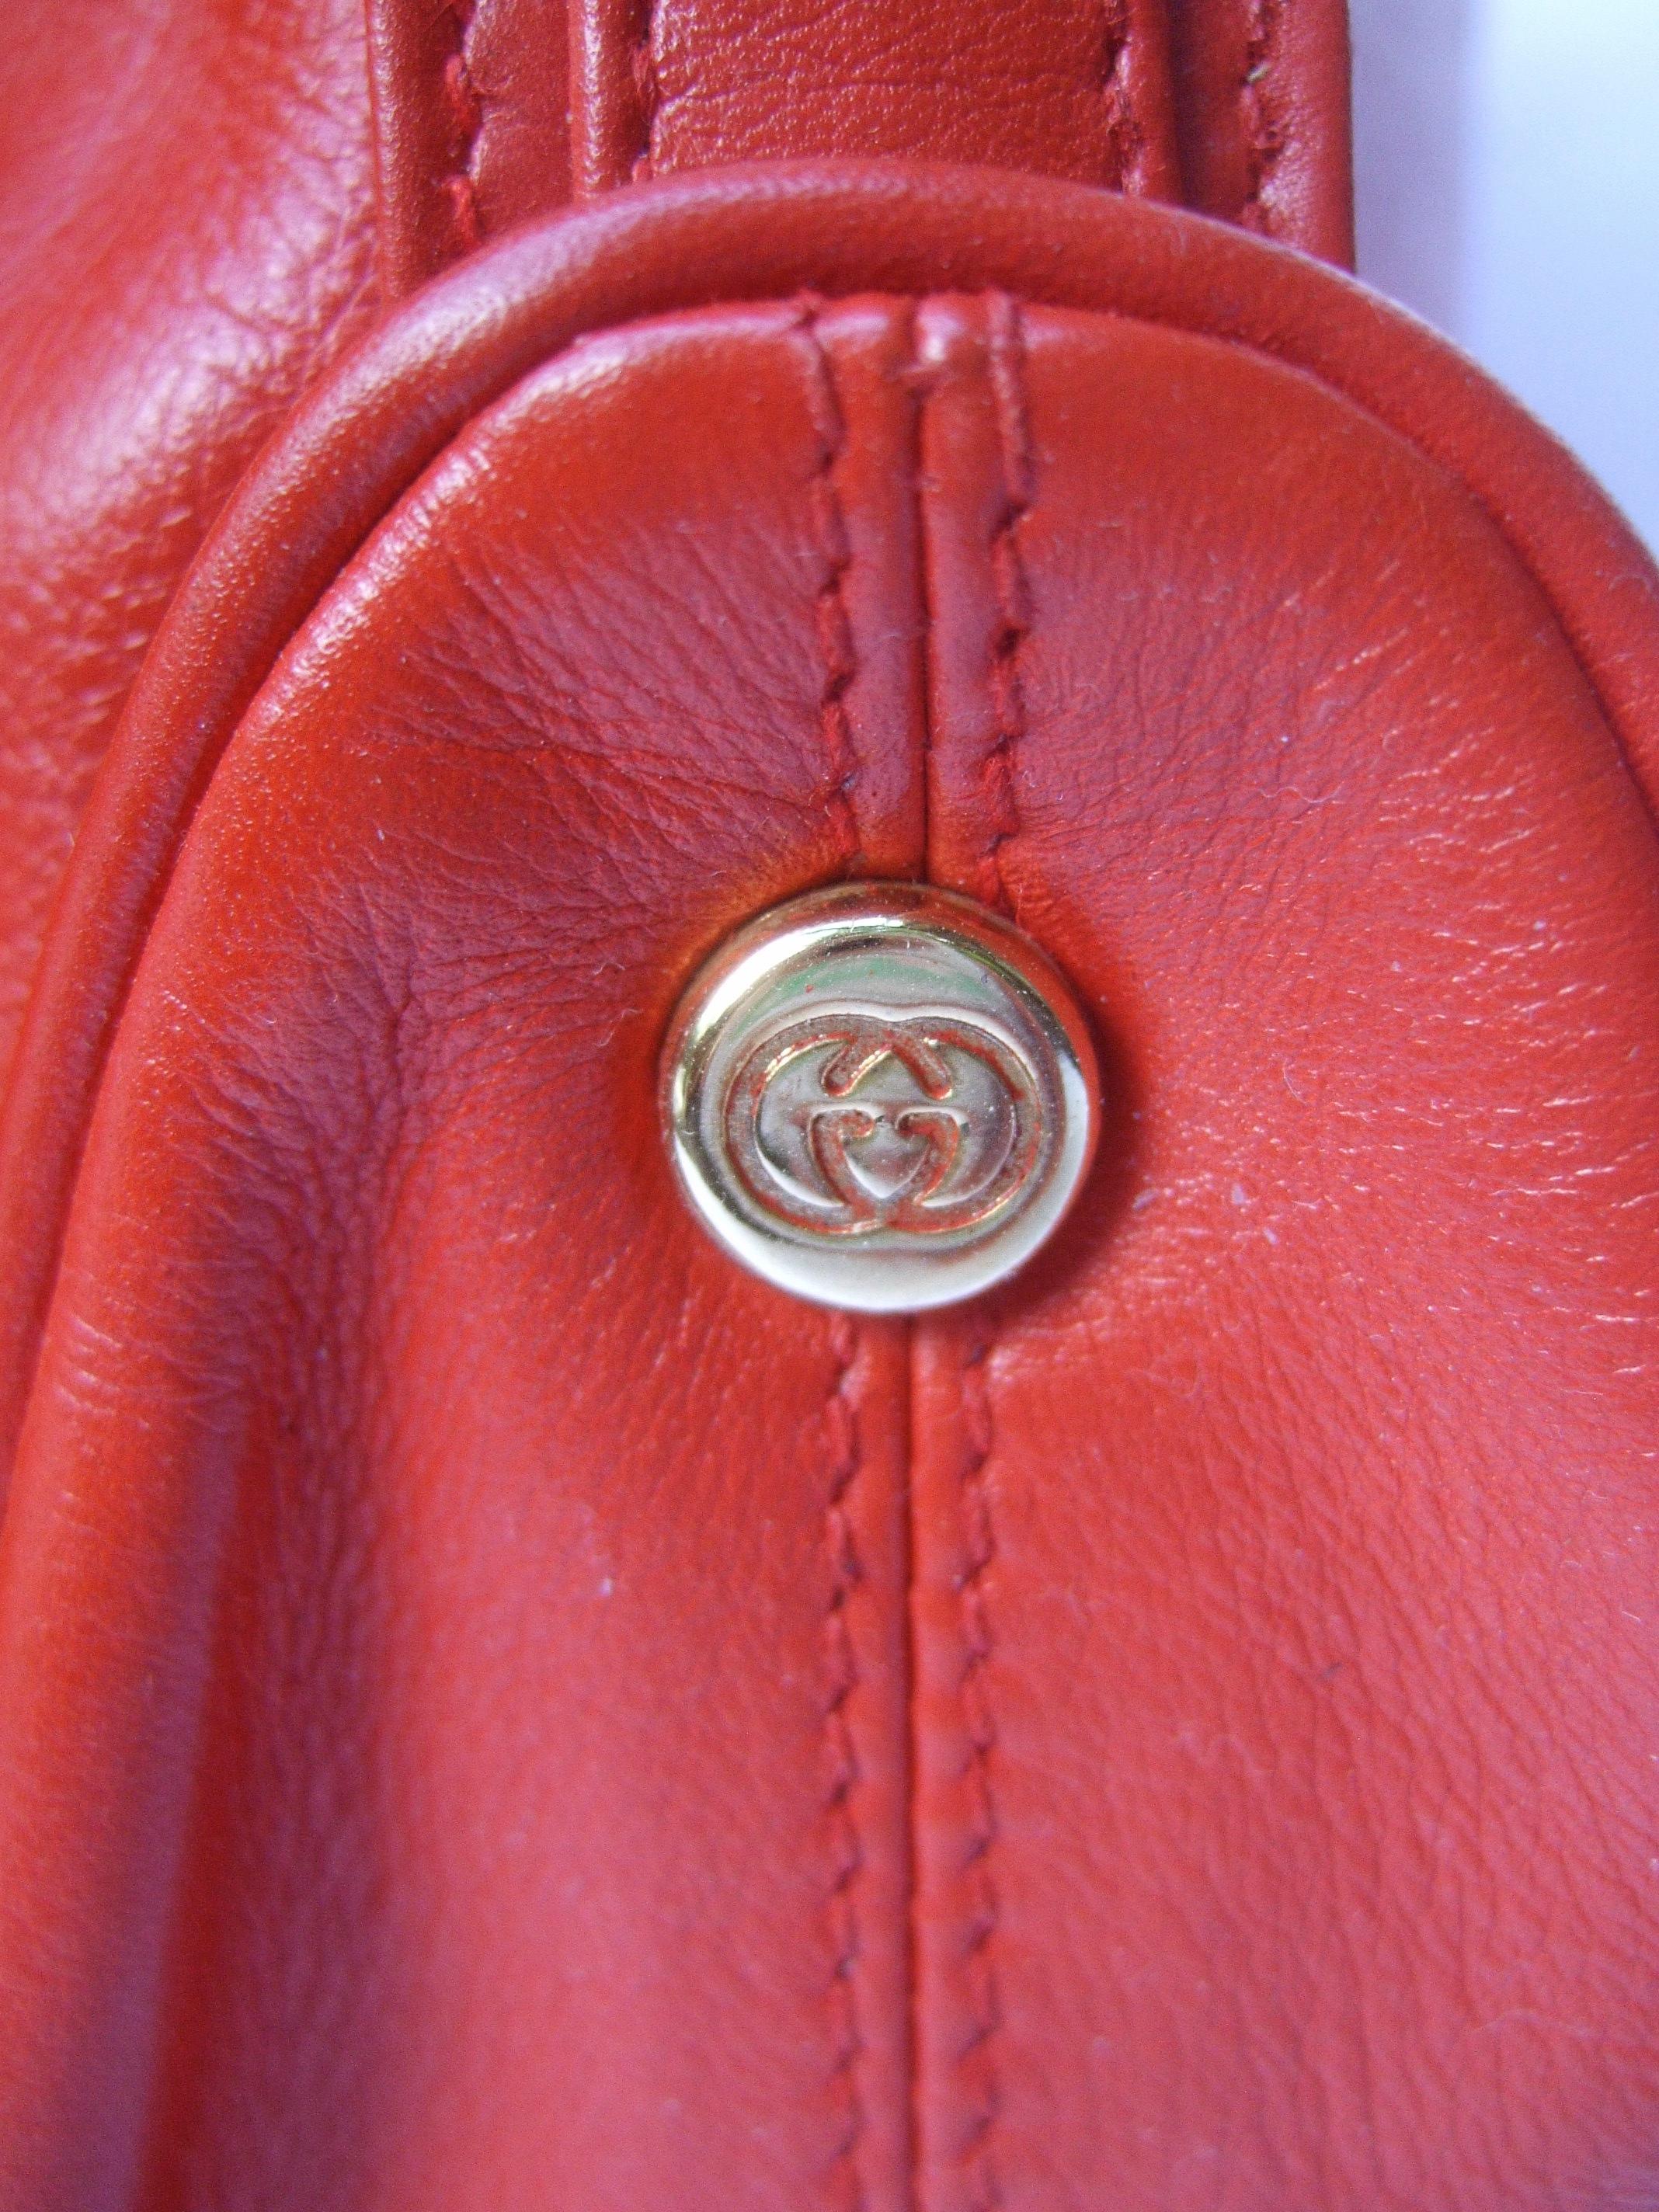 Gucci Italy Rare Red Leather Tiger Emblem Shoulder Bag c 1980s  3